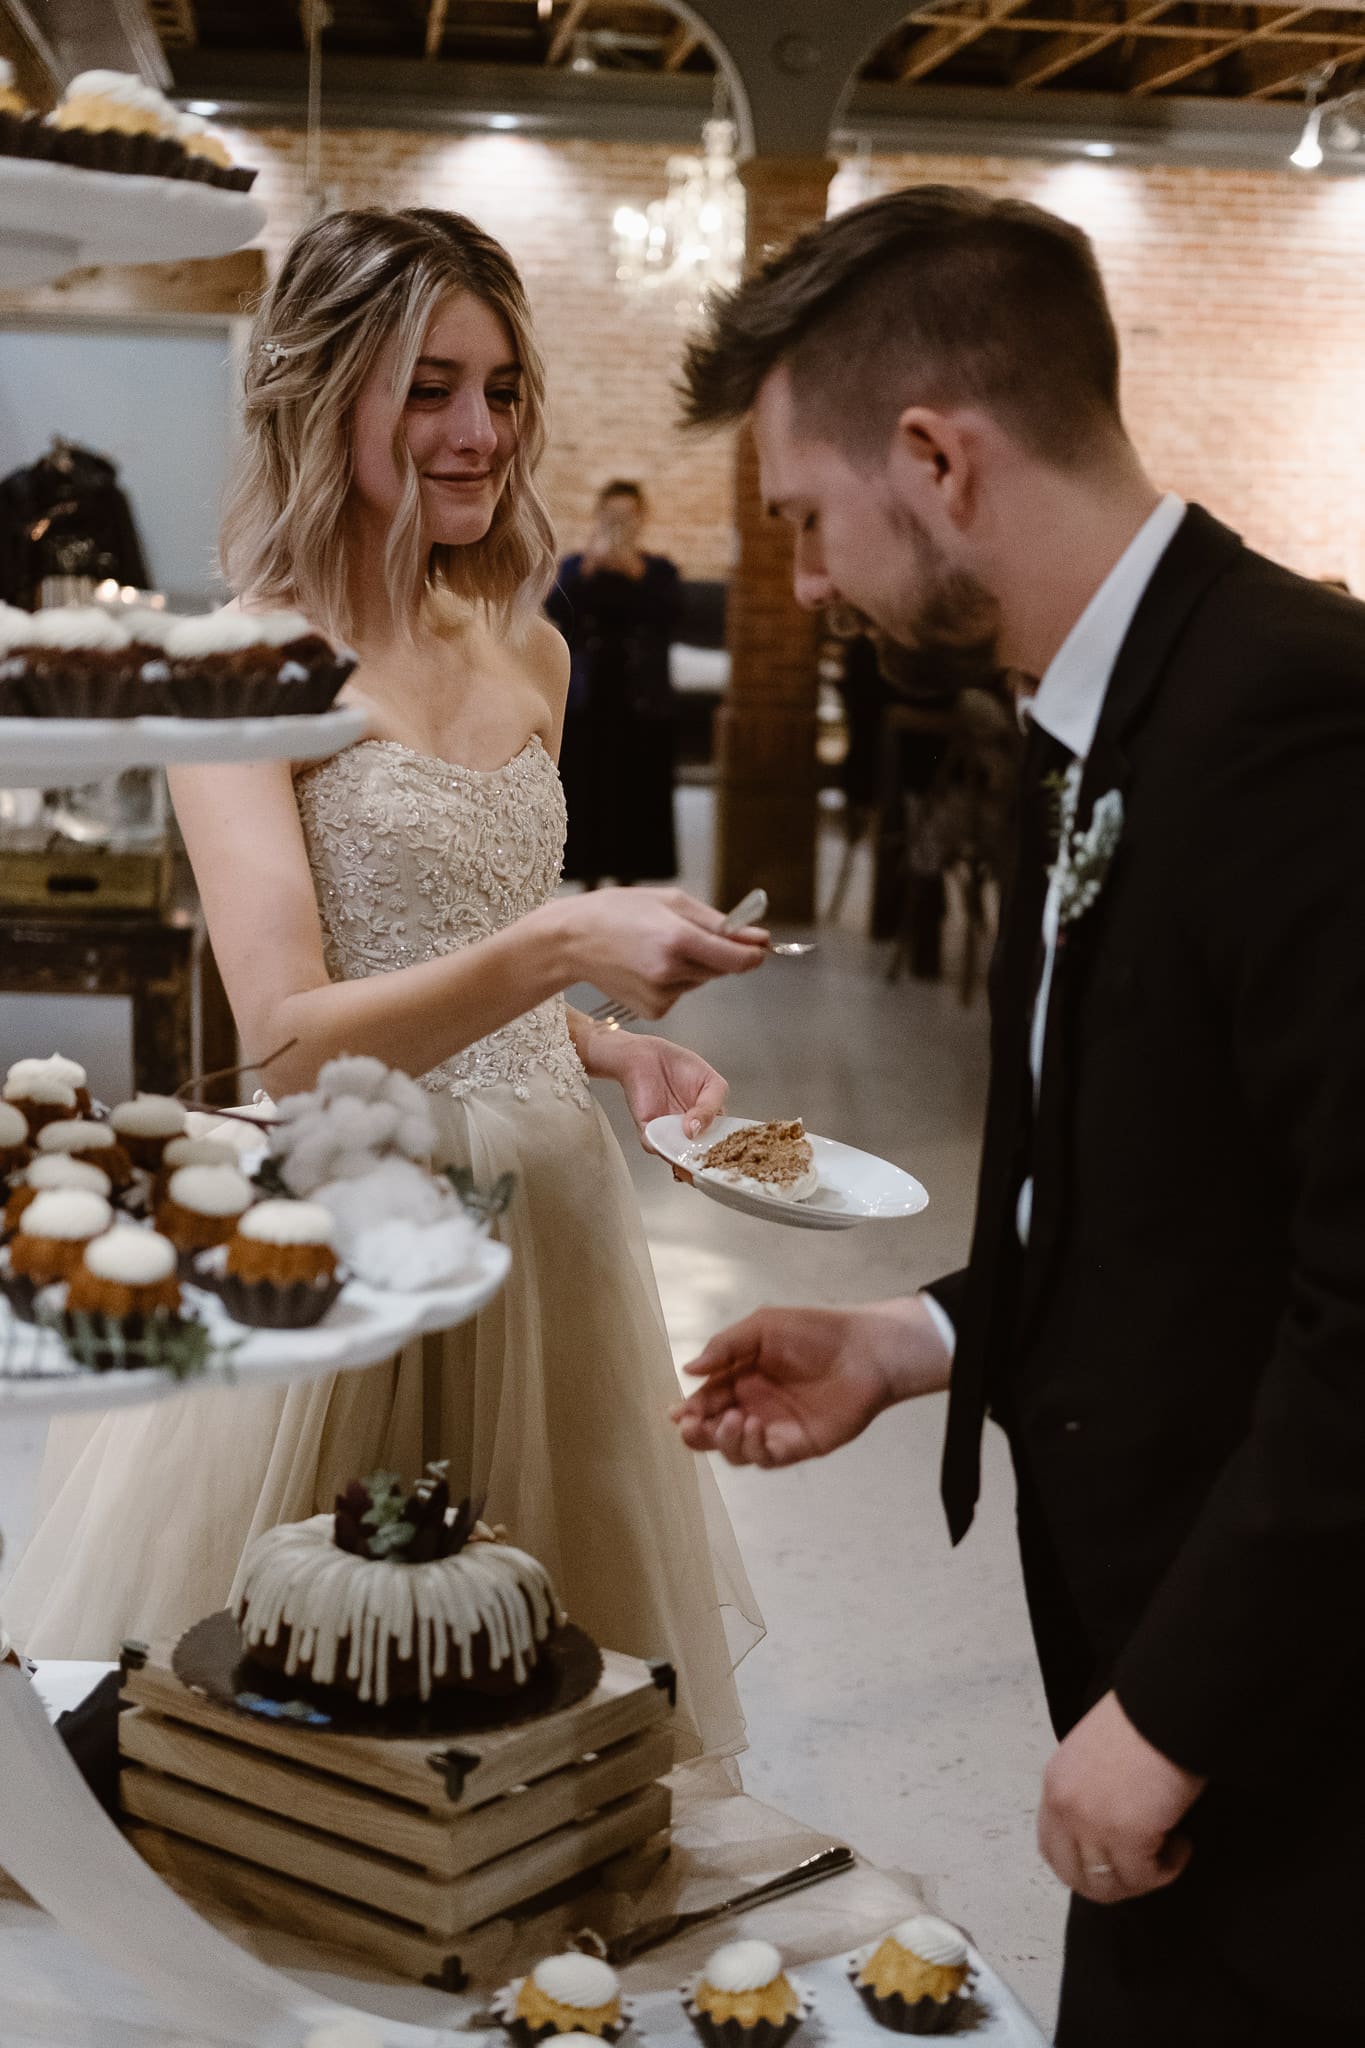 St Vrain Wedding Photographer | Longmont Wedding Photographer | Colorado Winter Wedding Photographer, Colorado industrial chic wedding ceremony, bride and groom cutting bundt cake